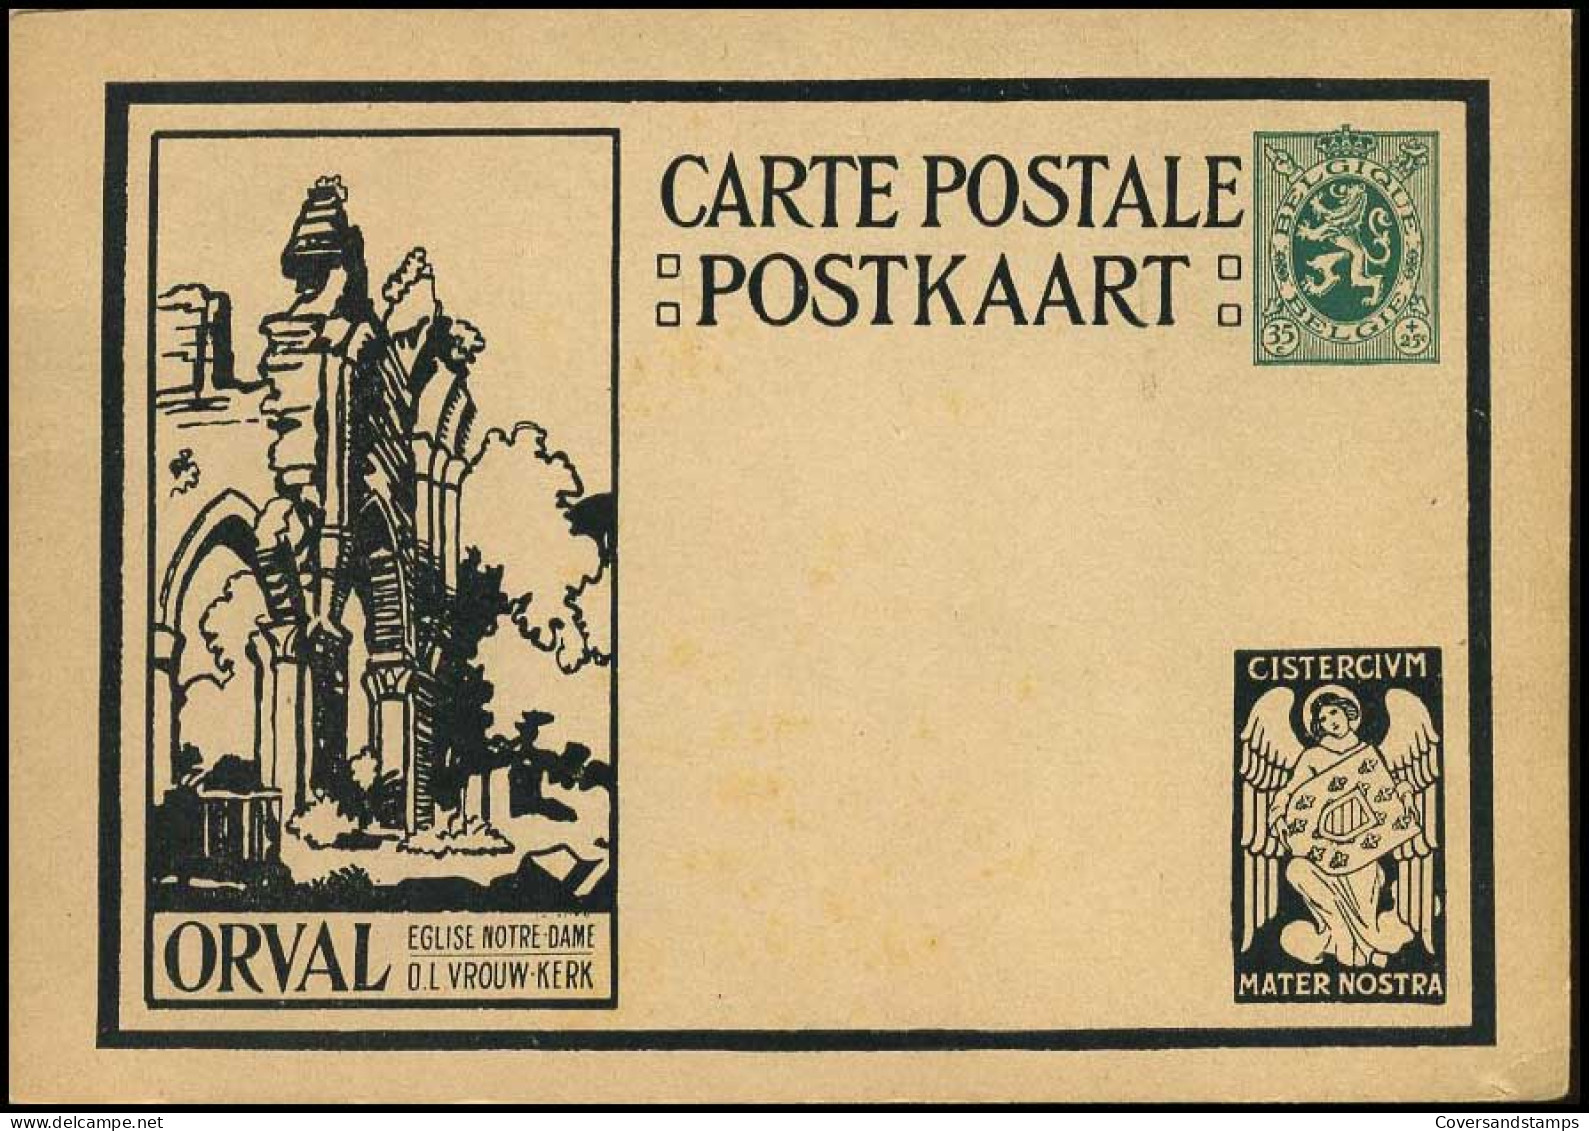 Postkaart - Orval, O.L. Vrouw Kerk - Cartoline Illustrate (1971-2014) [BK]